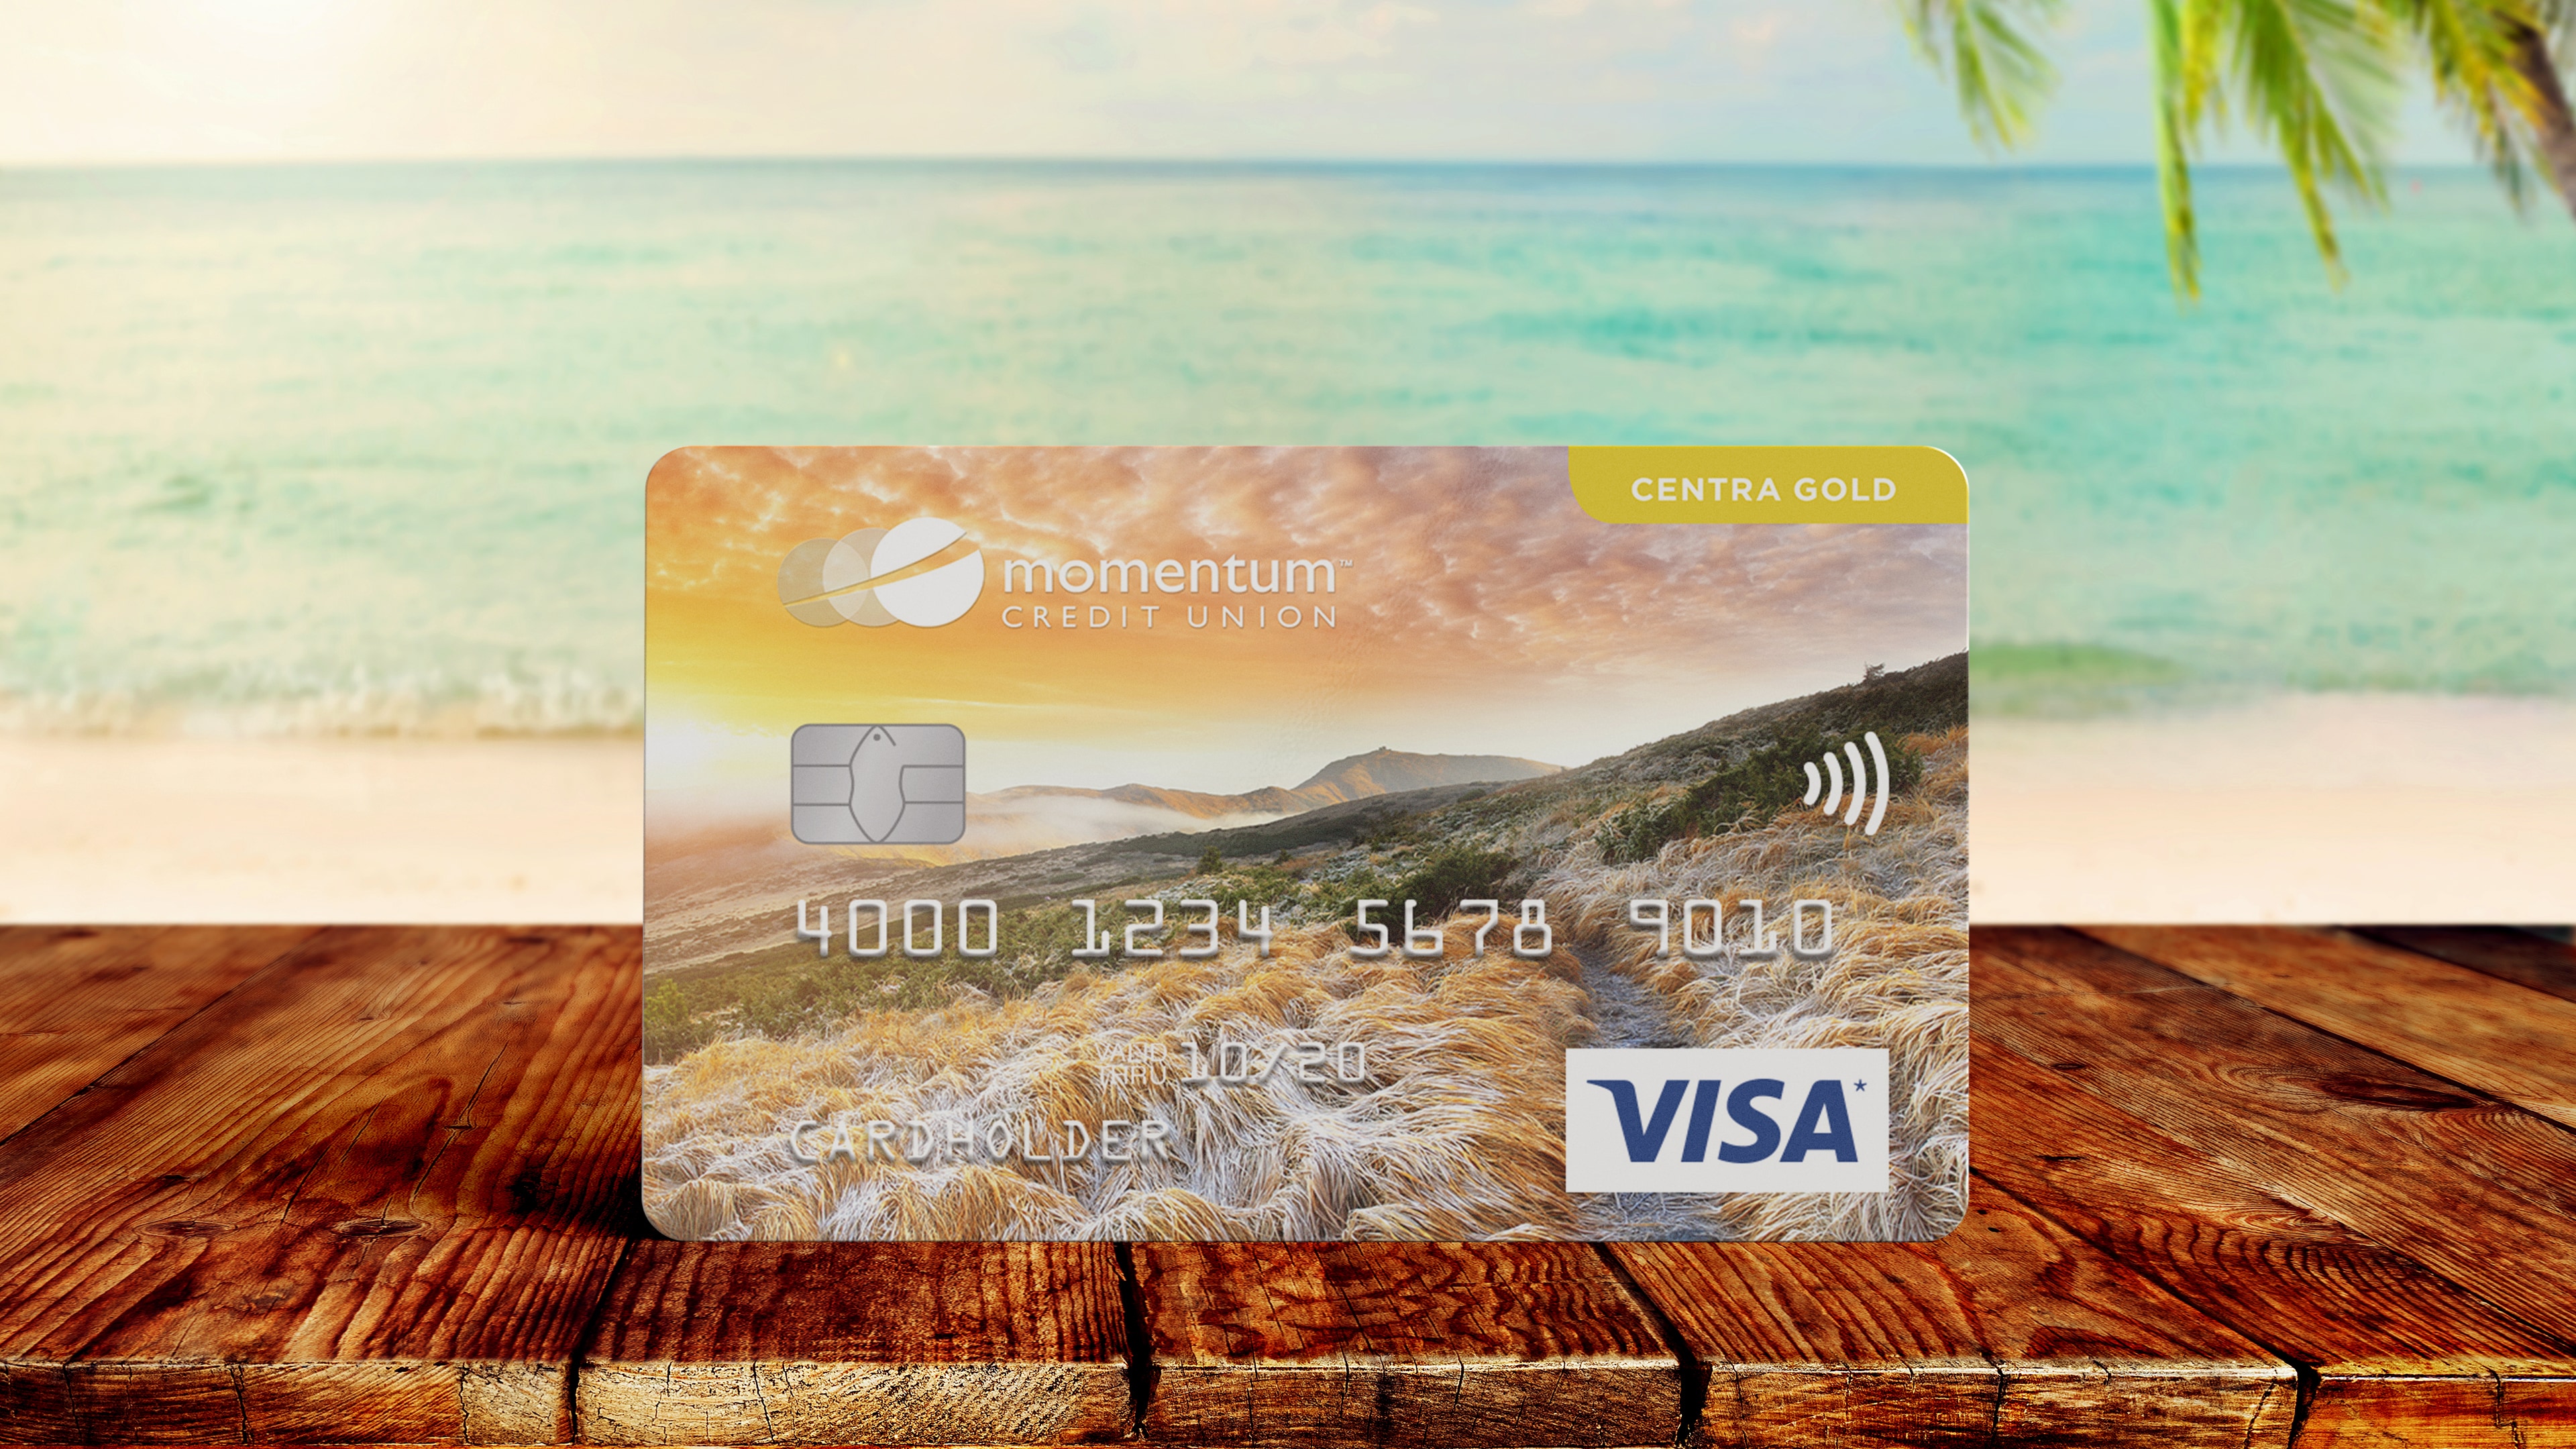 Momentum Visa Centra Gold Card